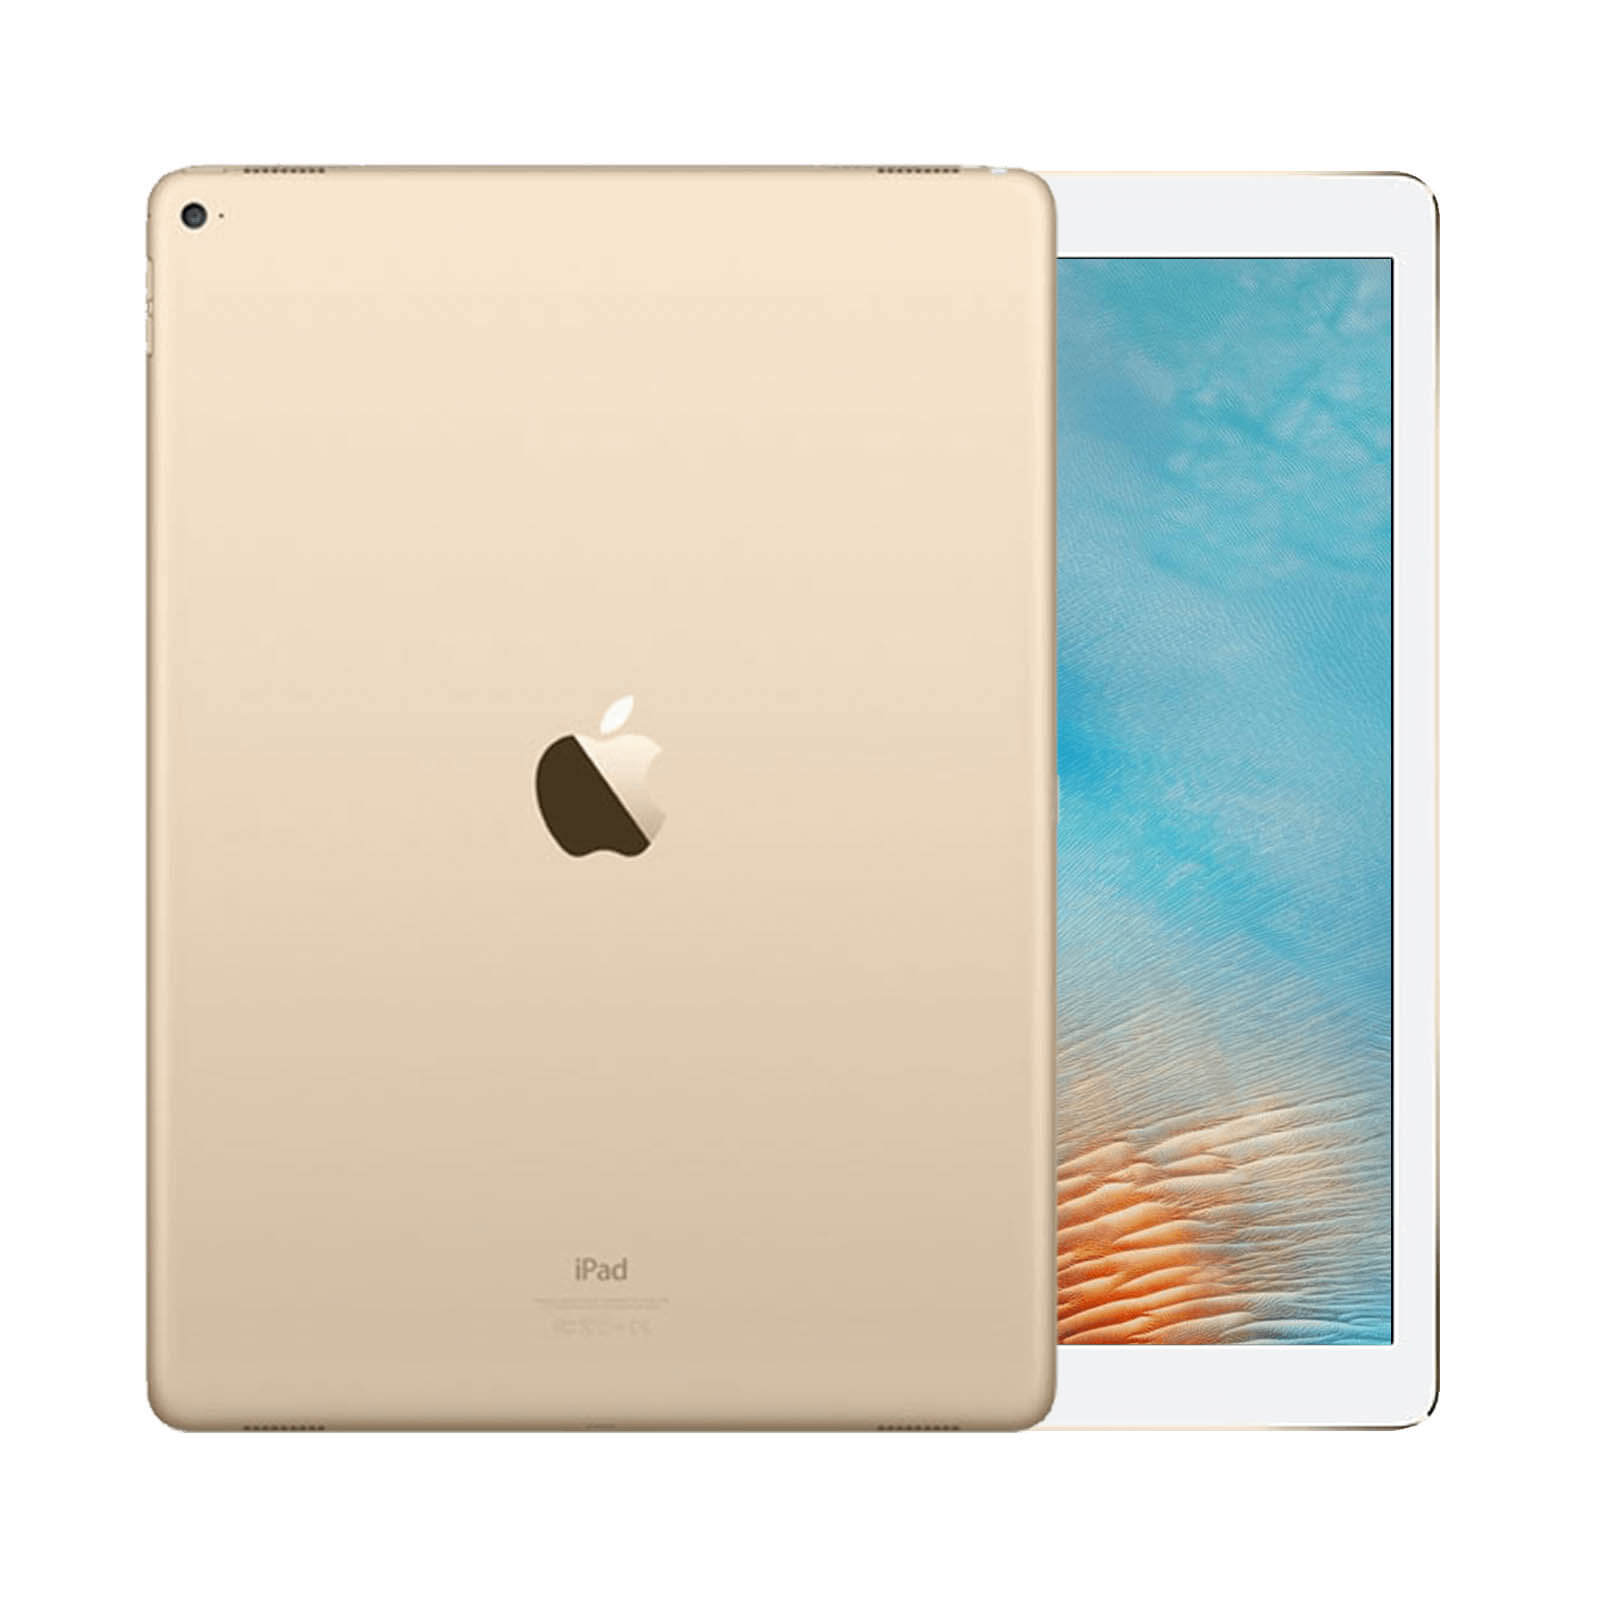 iPad Pro 12.9 Inch 2nd Gen 64GB Gold Pristine - WiFi